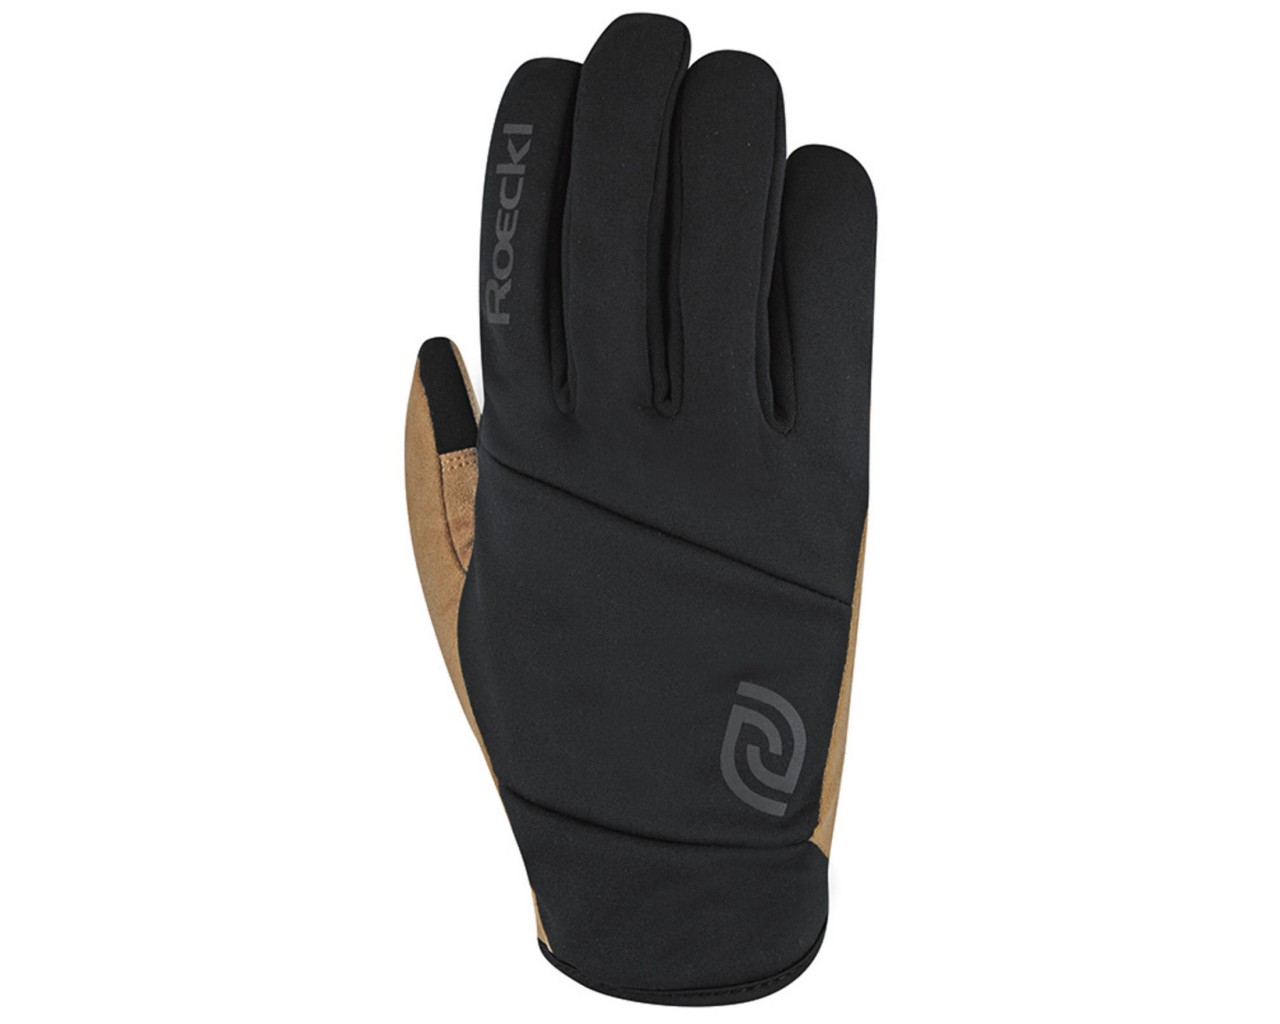 Roeckl Valepp Gloves long fingers | black-camel